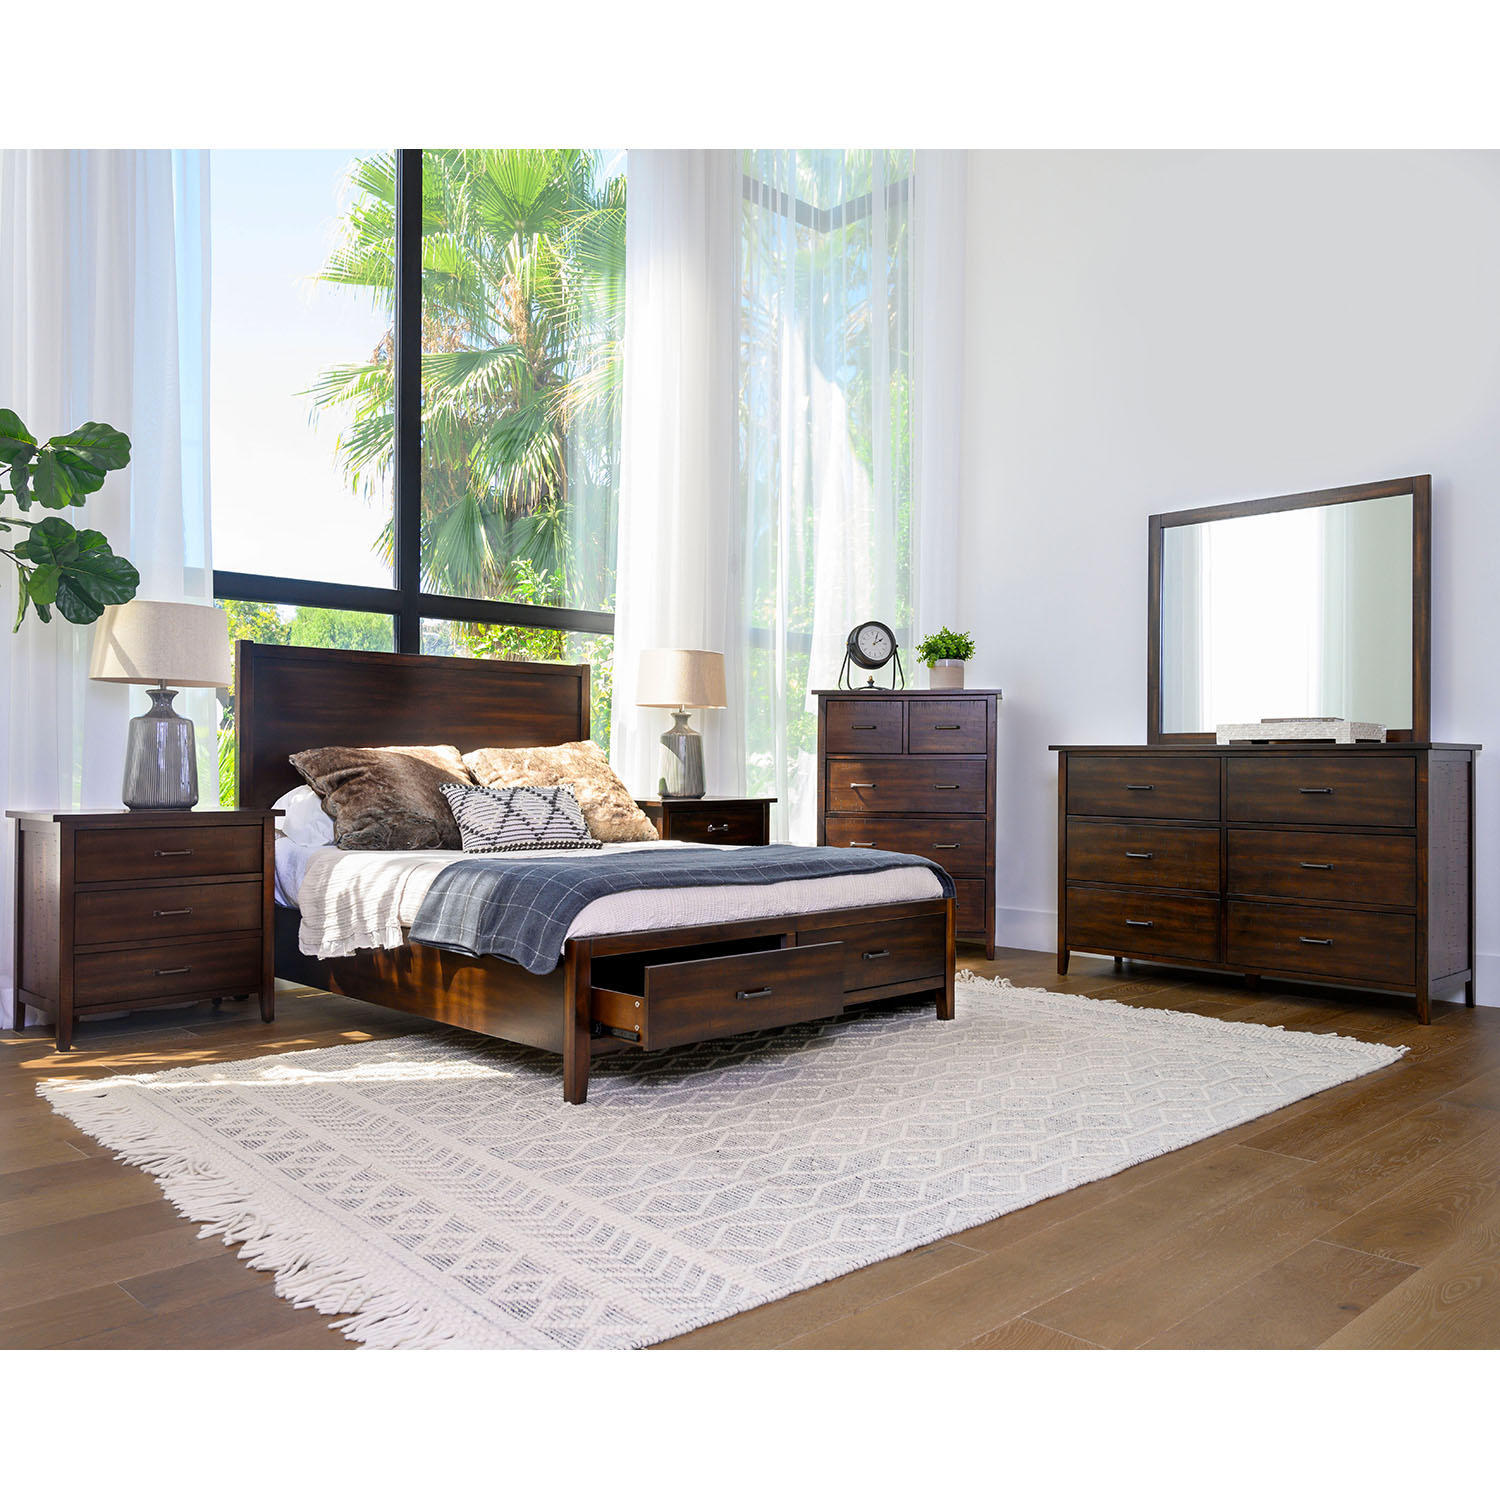 Melville Distressed Wood 6 Piece Bedroom Set